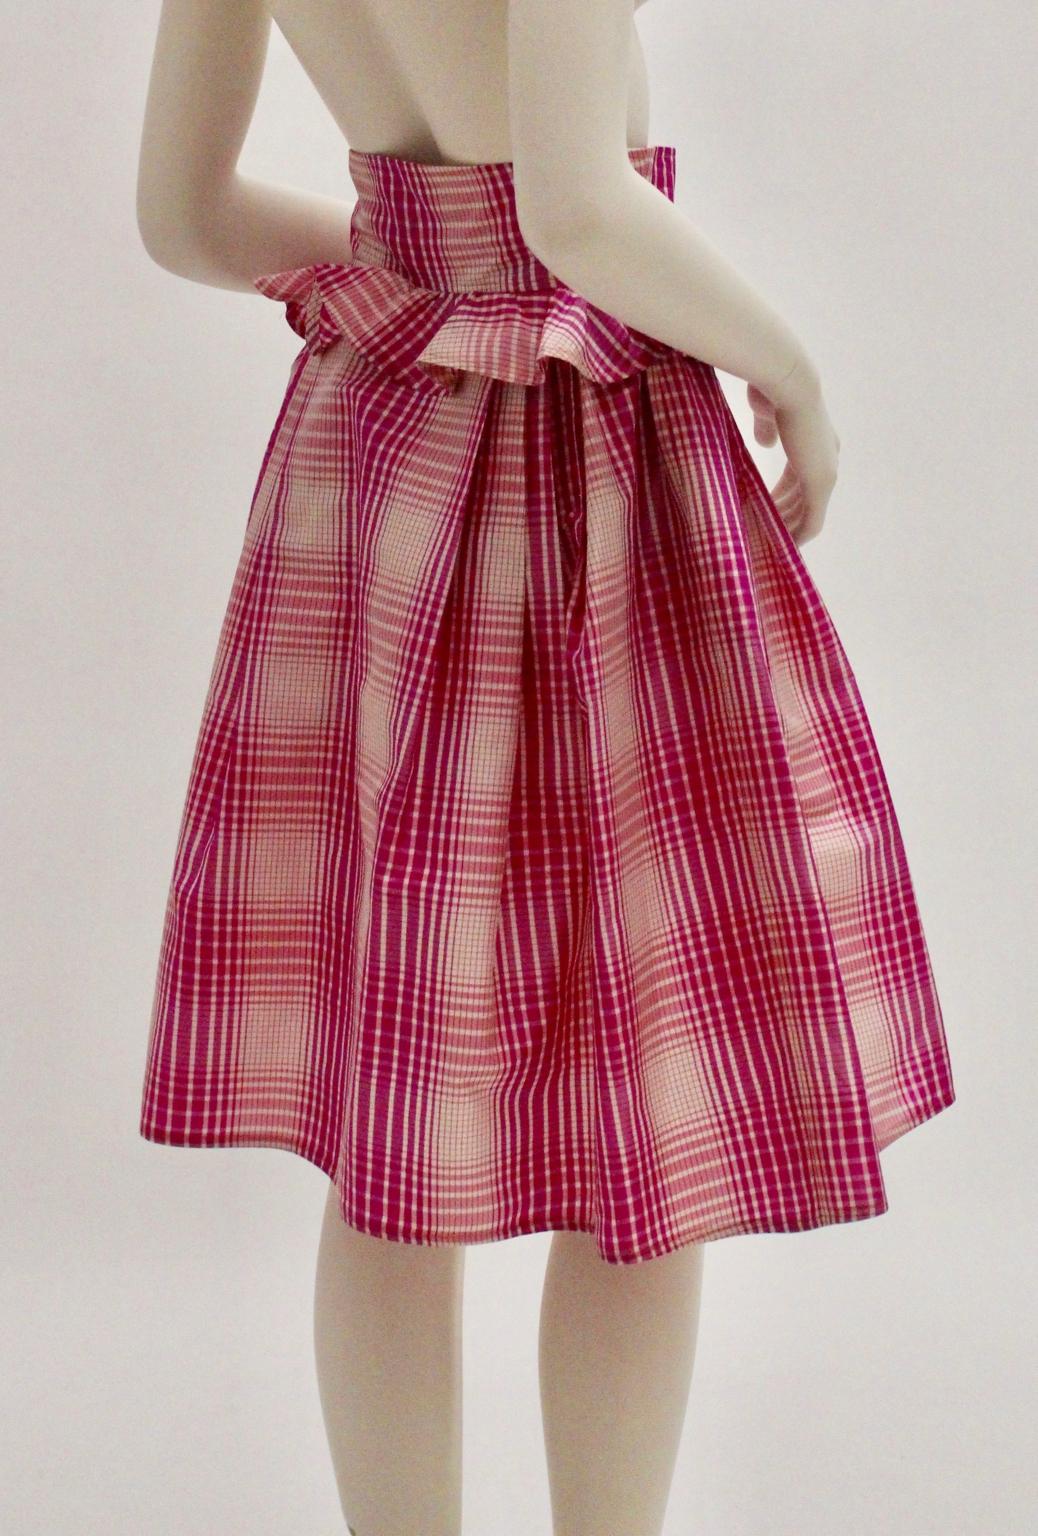 Silk Pink White Checker Vintage High Waist Skirt by Emanuel Ungaro 1980s Paris For Sale 4